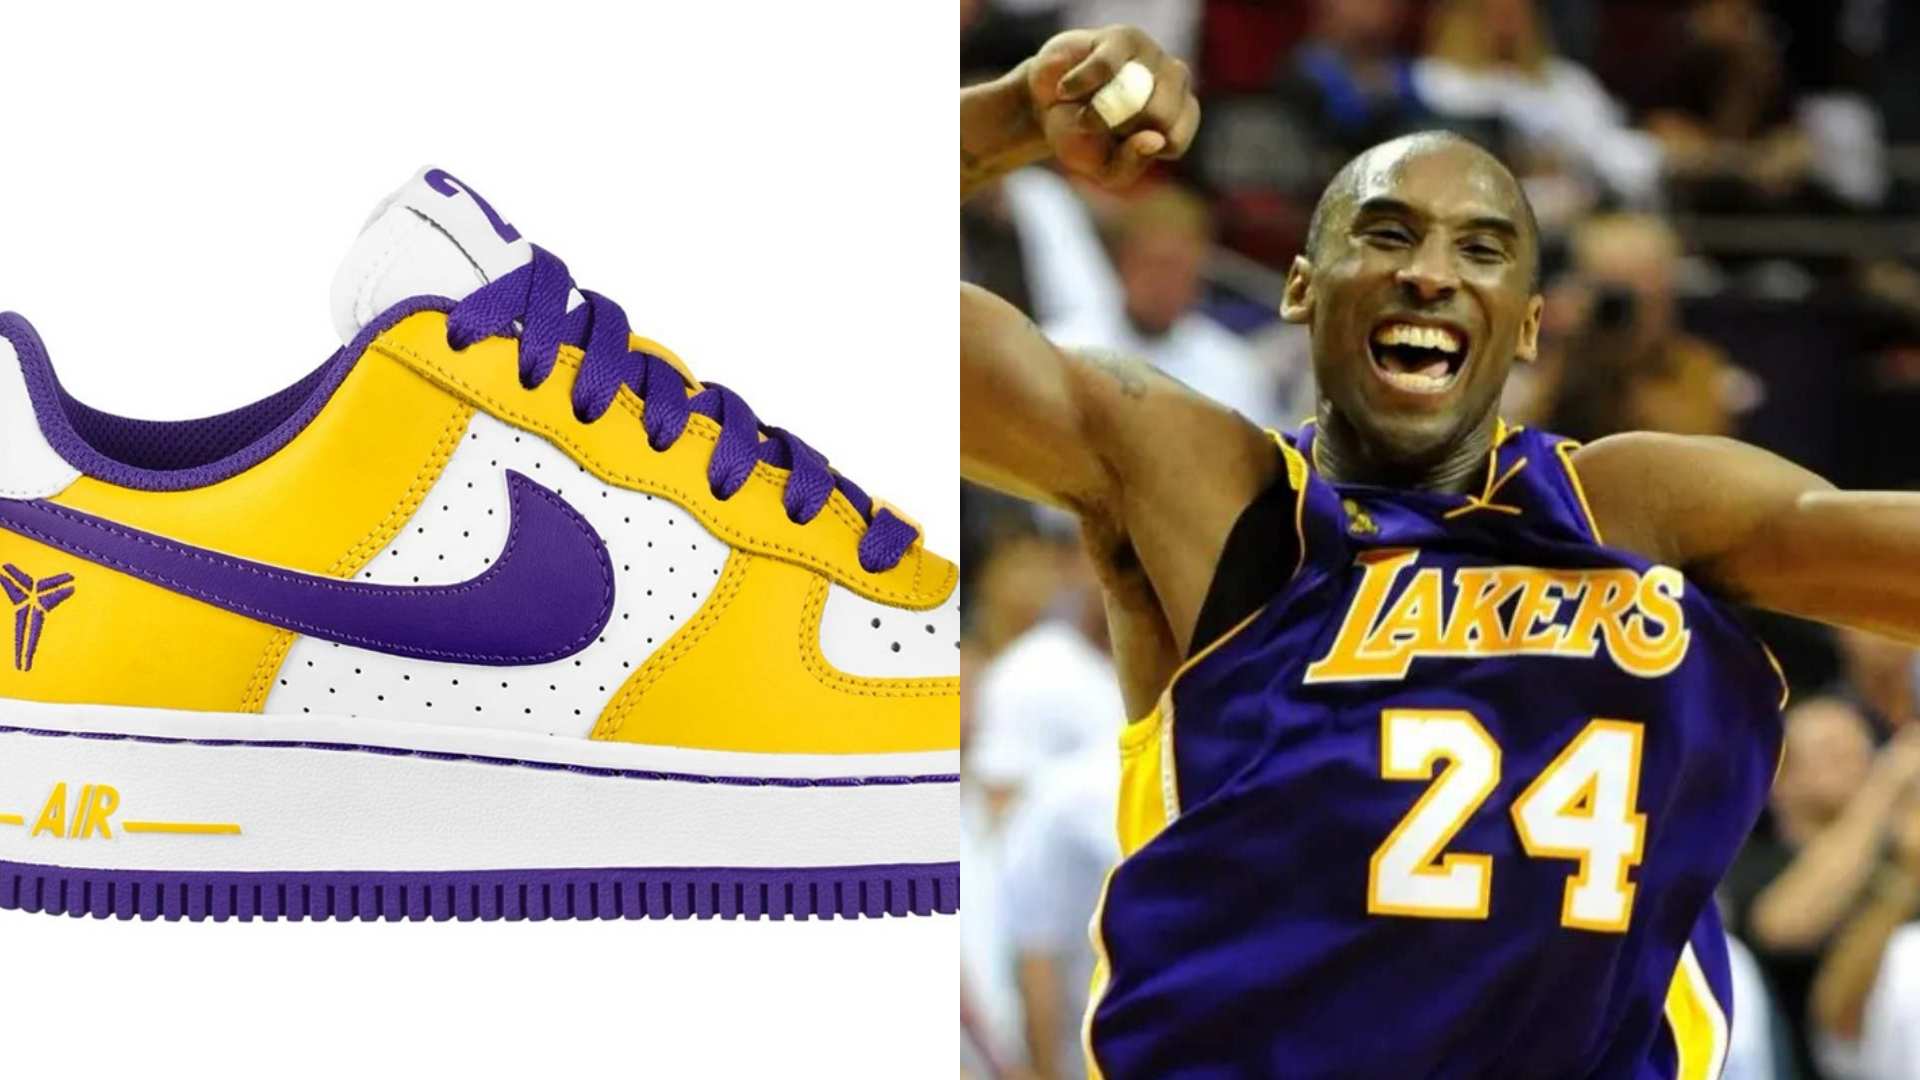 Capa Nike e Kobe Bryant